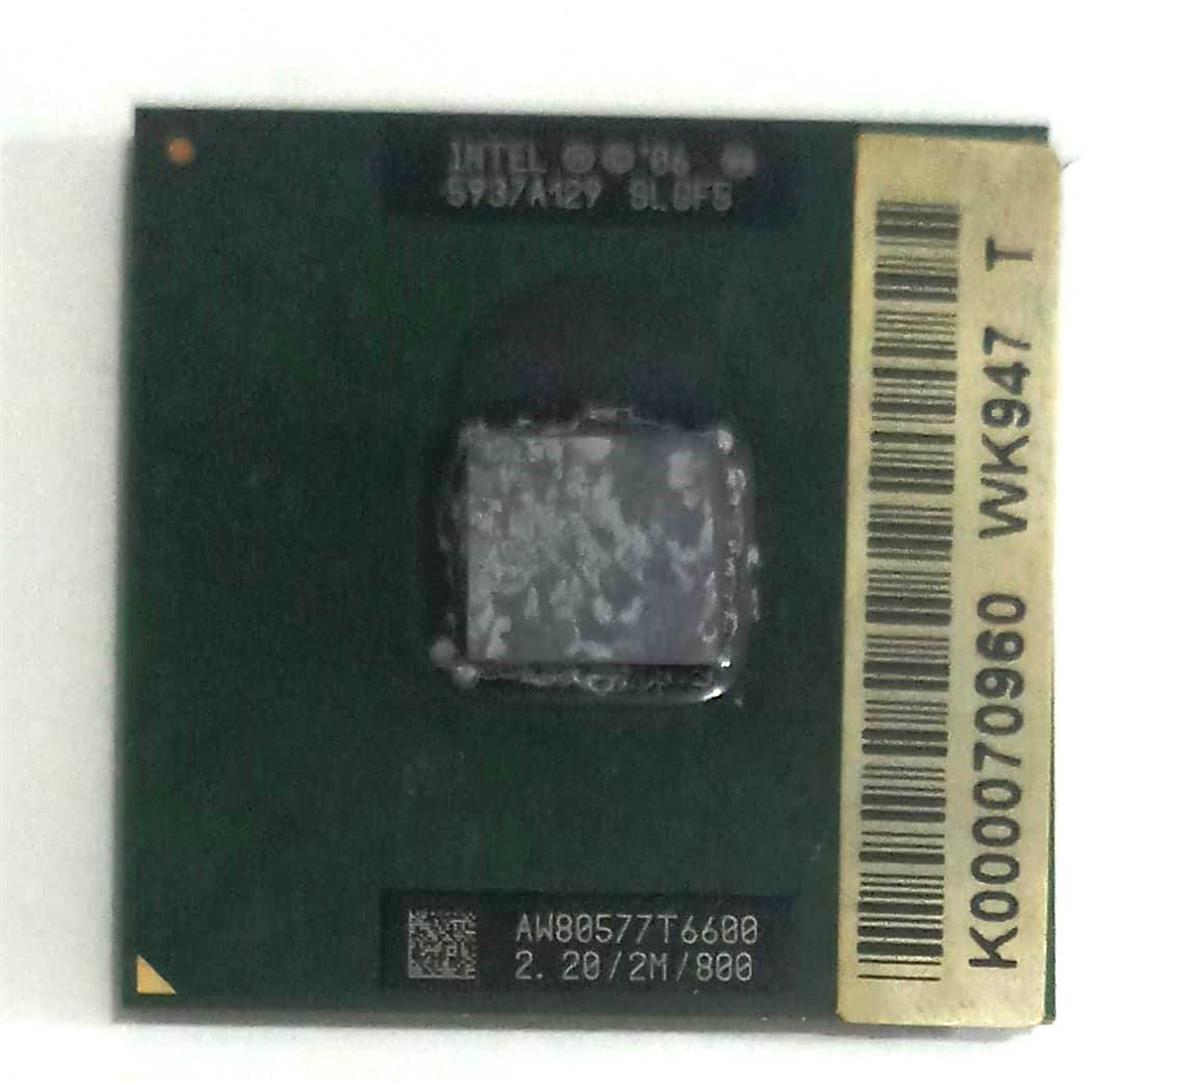 Intel Core 2 Duo mobil T6600 SLGF5 2.2 GHz çift çekirdekli çift dişli CPU  işlemci 2M 35W soket P STOK: İŞ KUTU